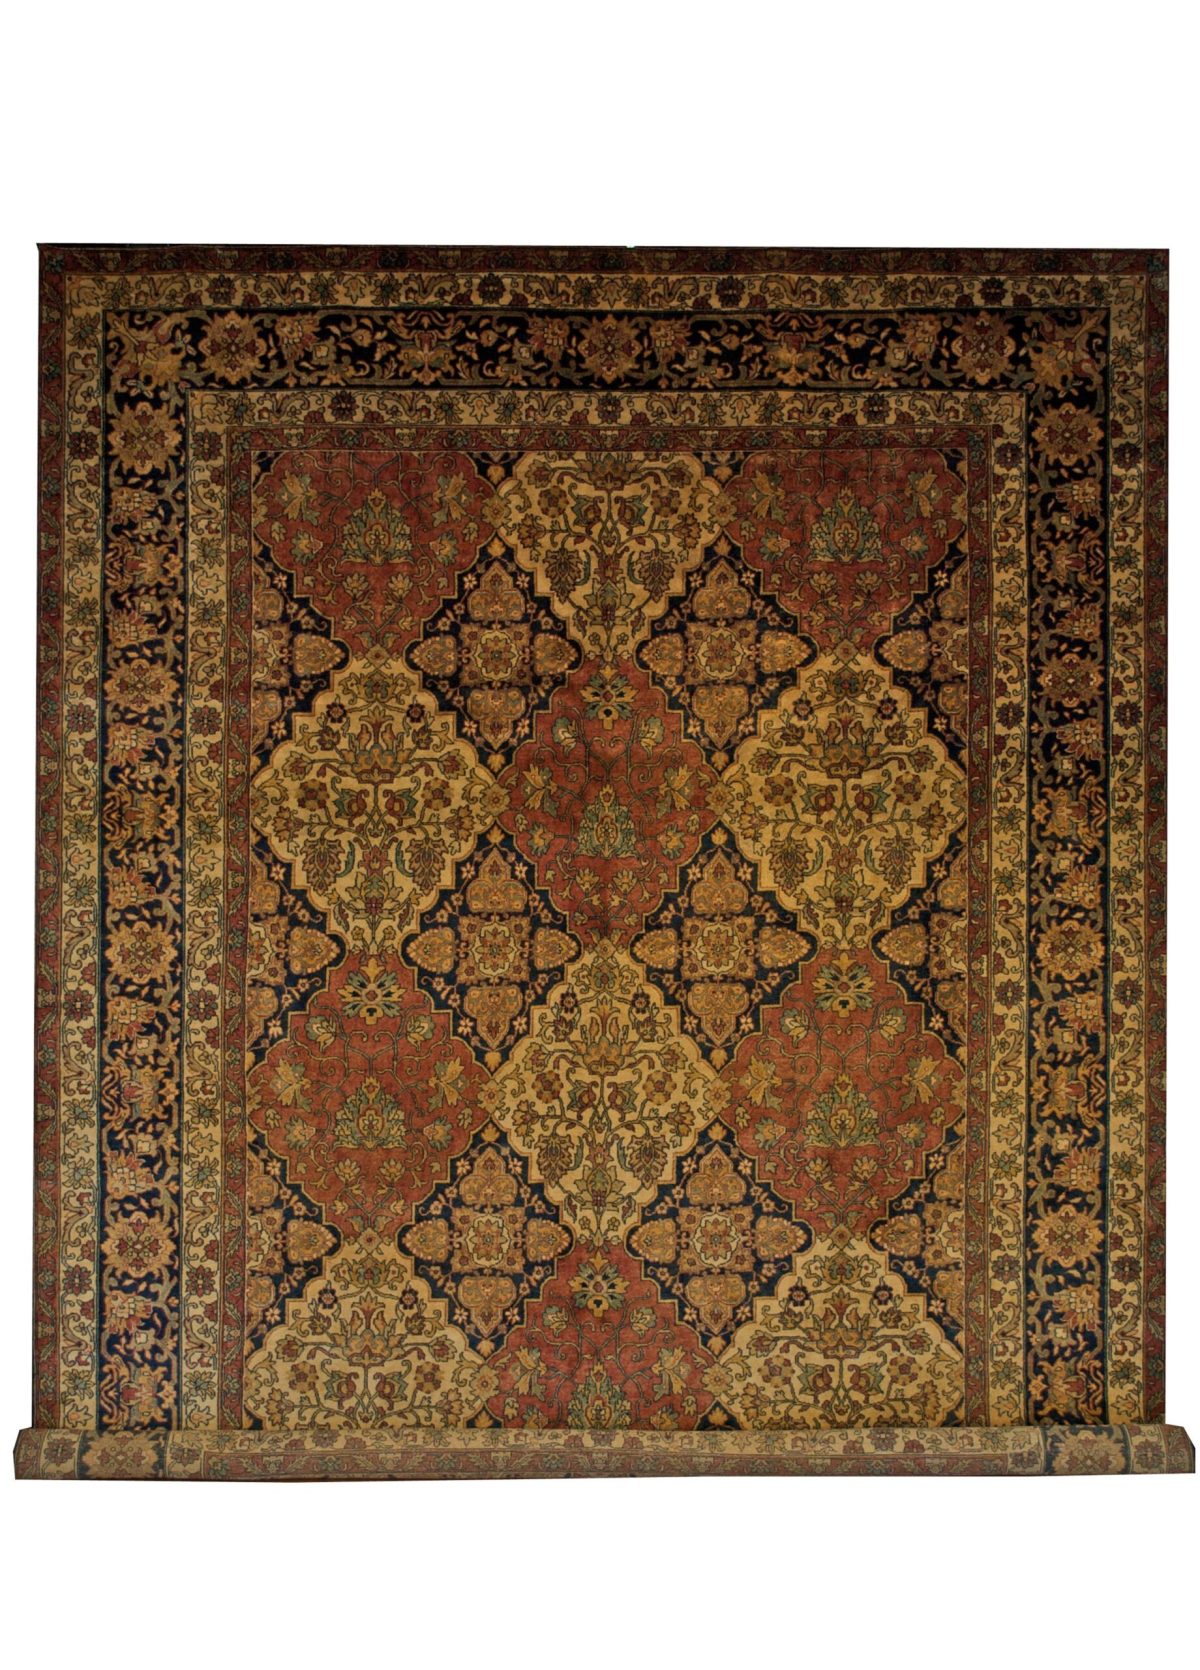 Old World Kerman 9' x 11' 9" Handmade Area Rug - Shabahang Royal Carpet